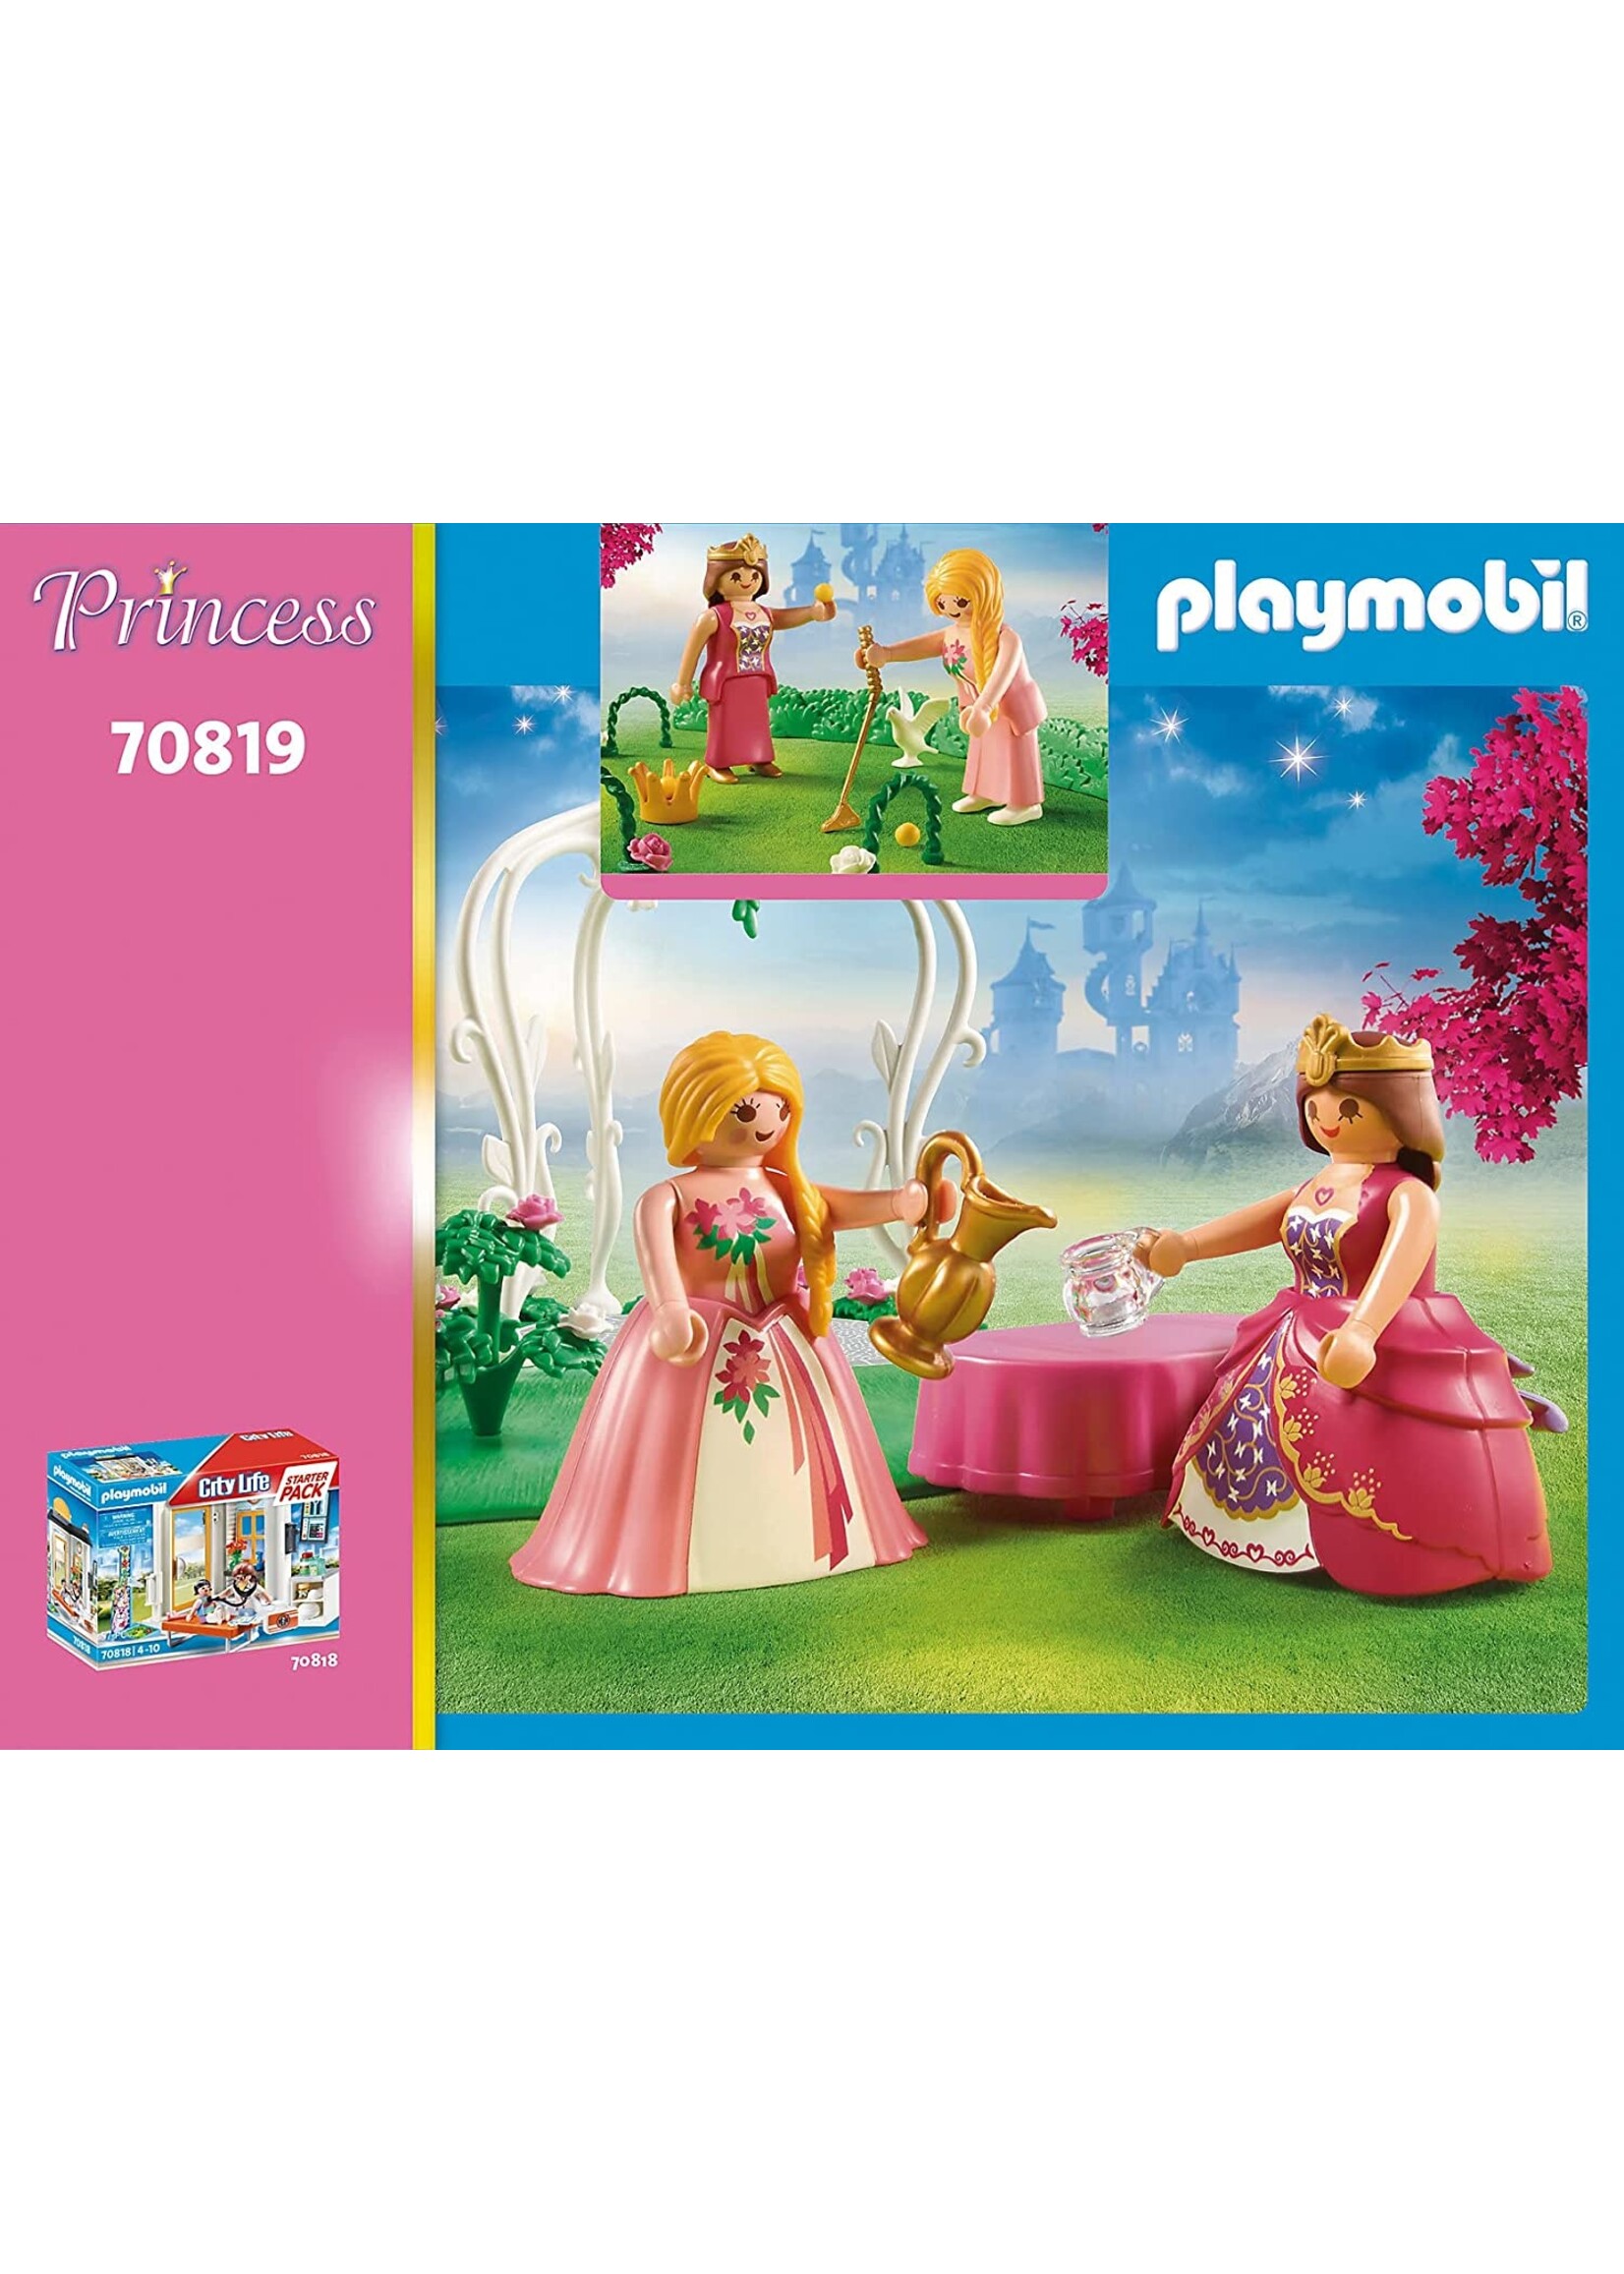 Playmobil Starter Pack Princess Garden